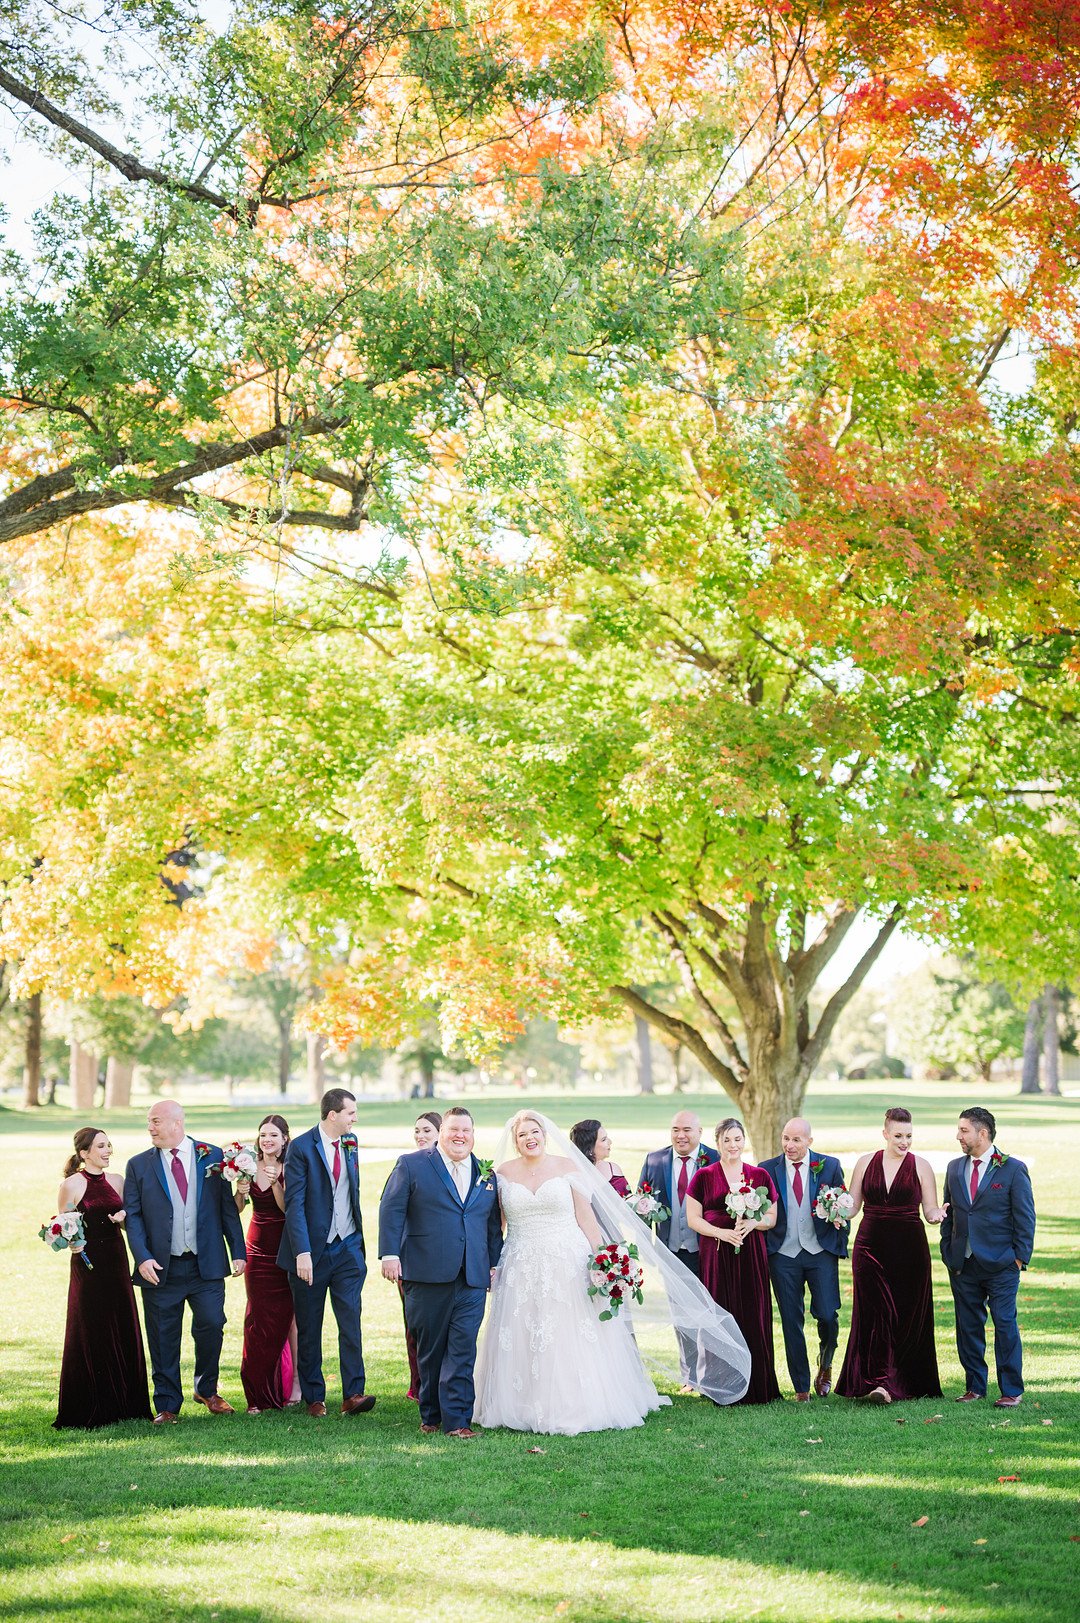 Jackson_Majcher_Winterlyn Photography_Rolling Green Country Club Autumn Wedding-50_low.jpg